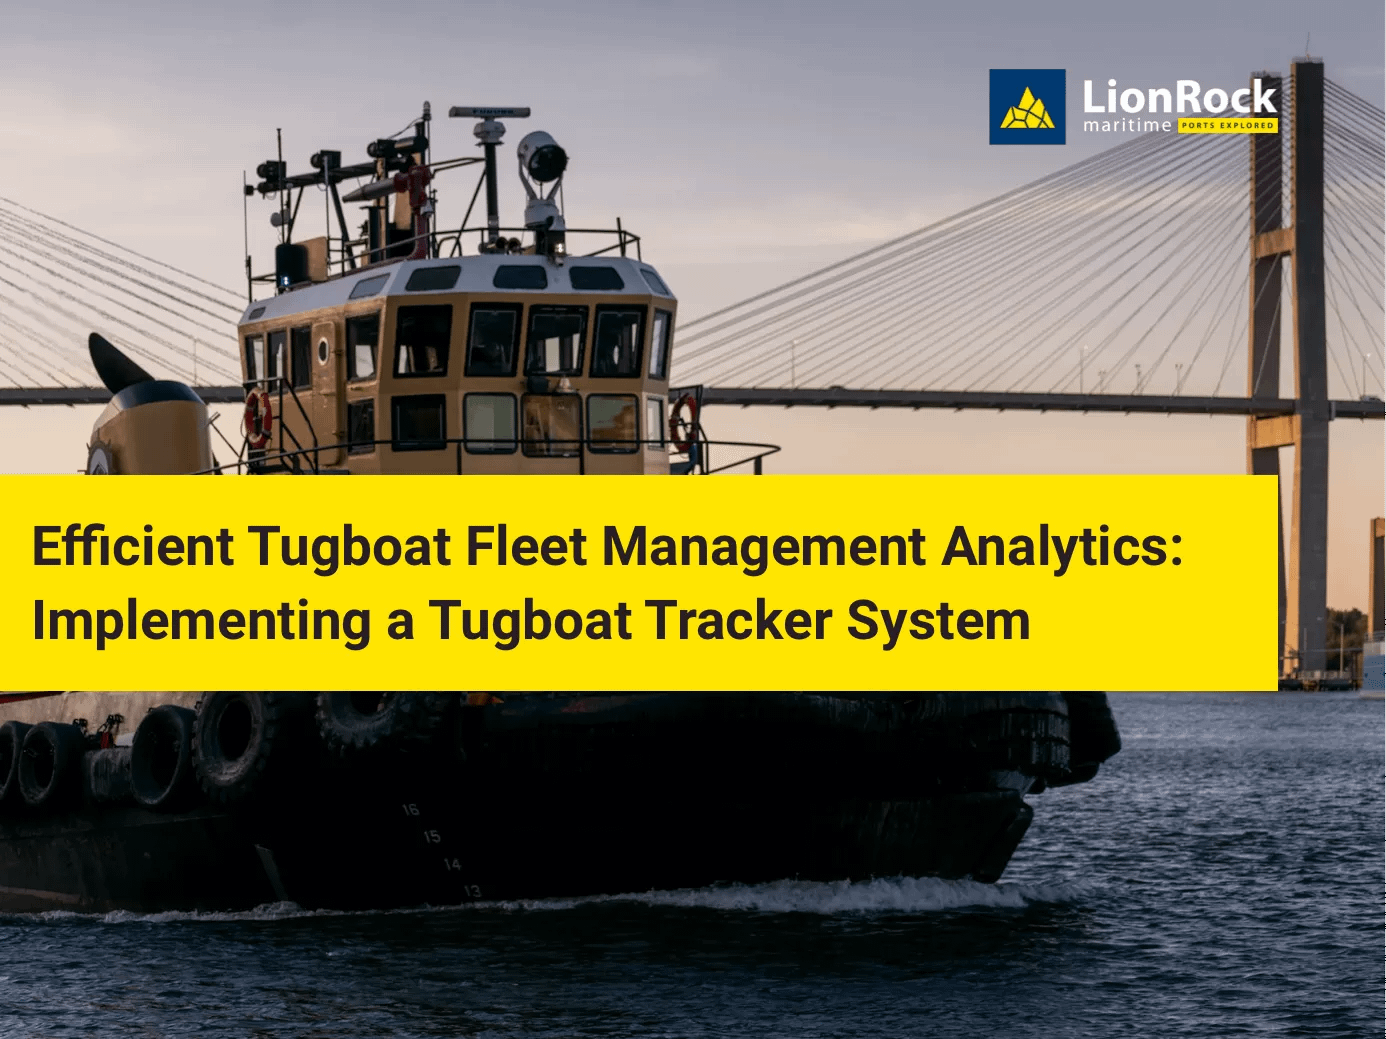 Fleet Management Analytics with Data - Tugboat Tracker System LionRock | LionRock Maritime